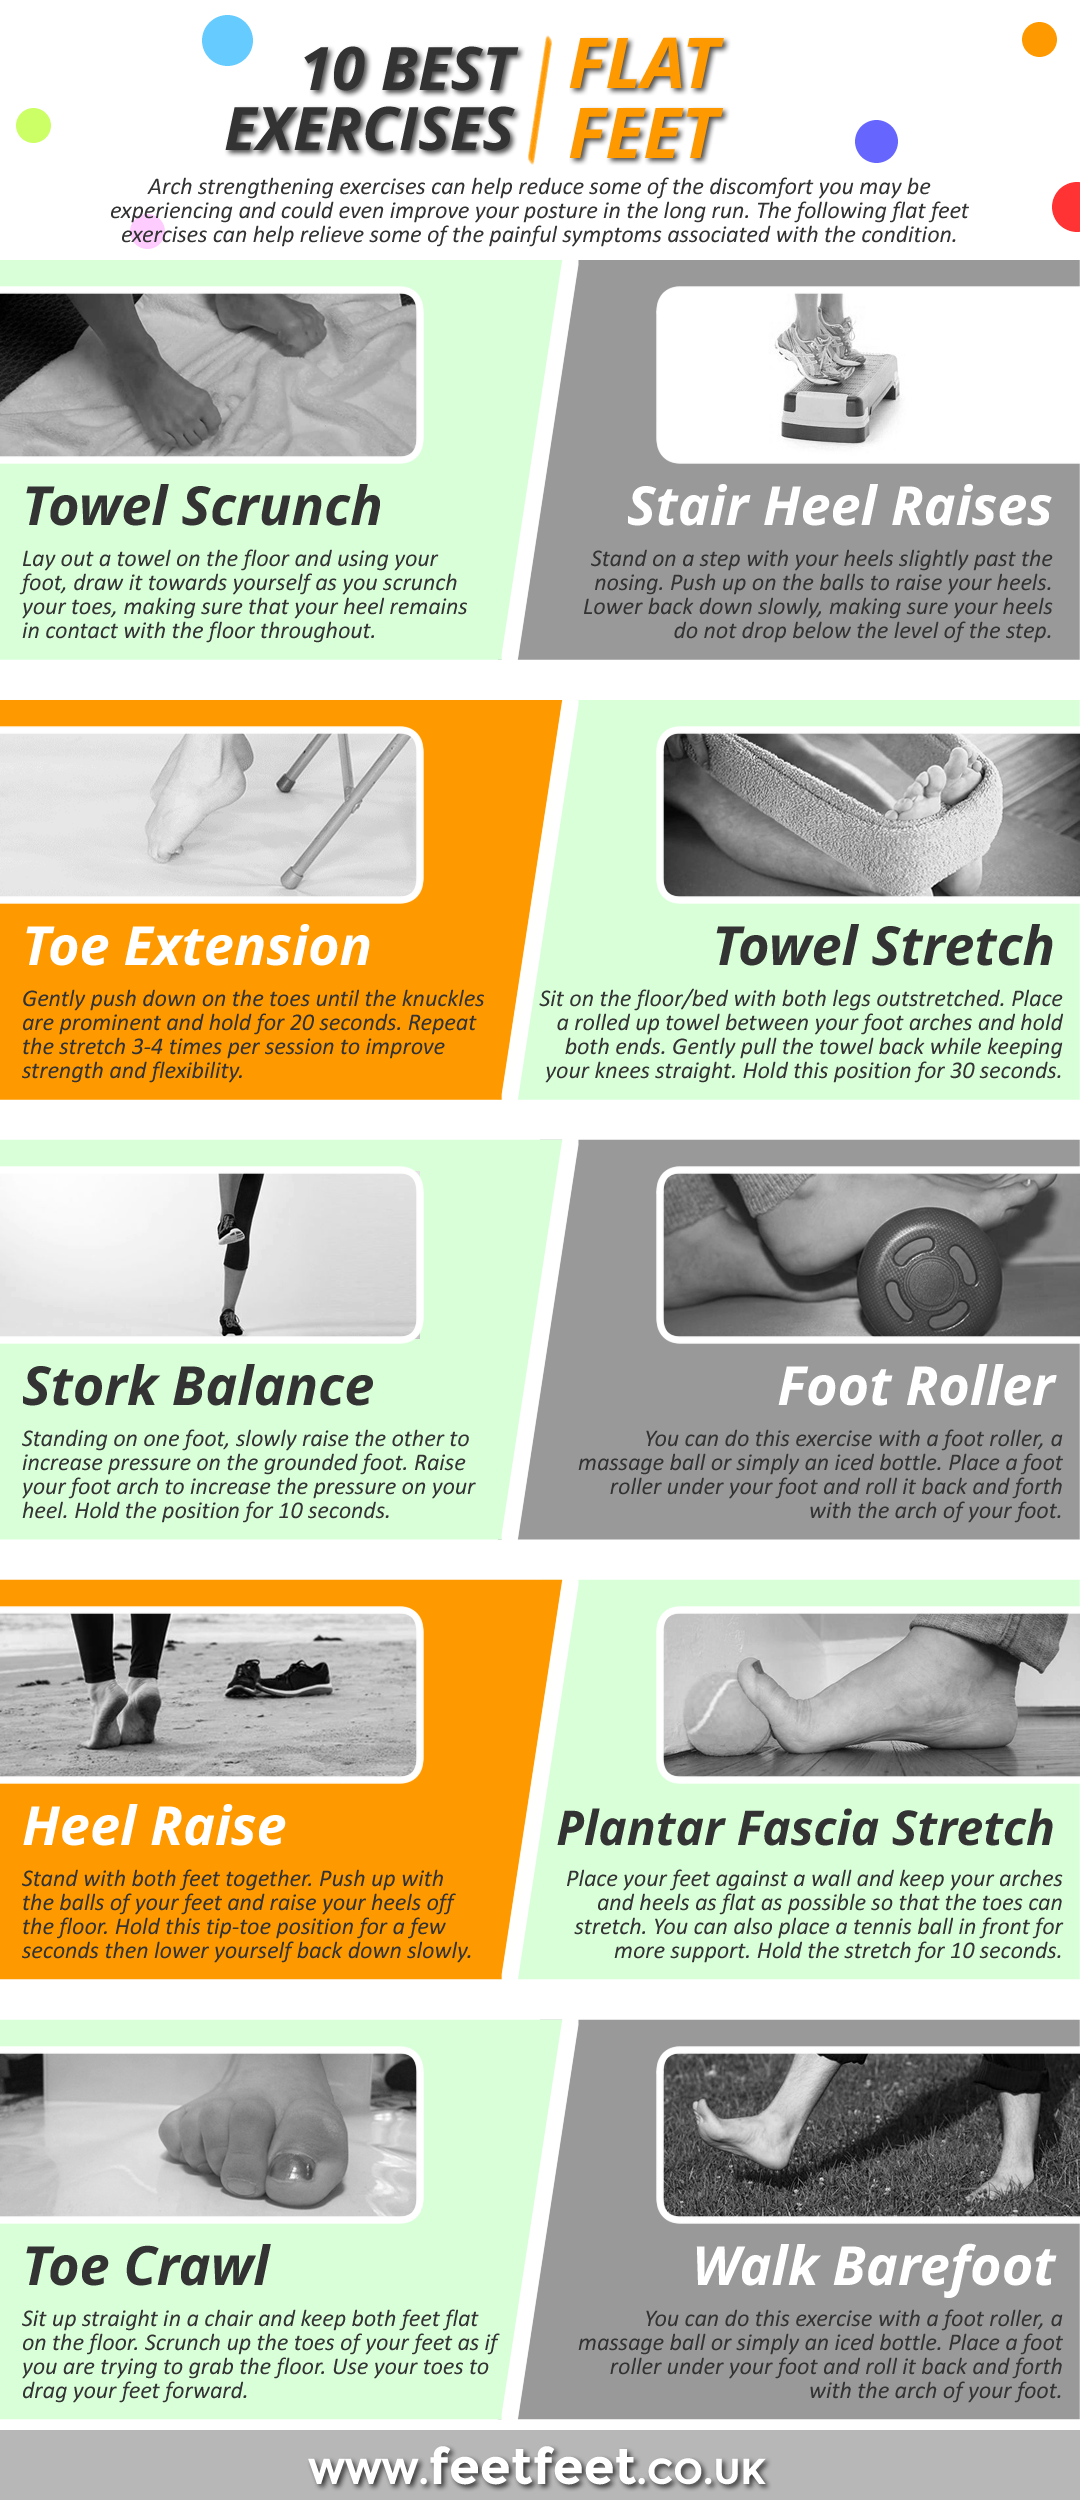 10 Best Flat Feet Exercises Infographic